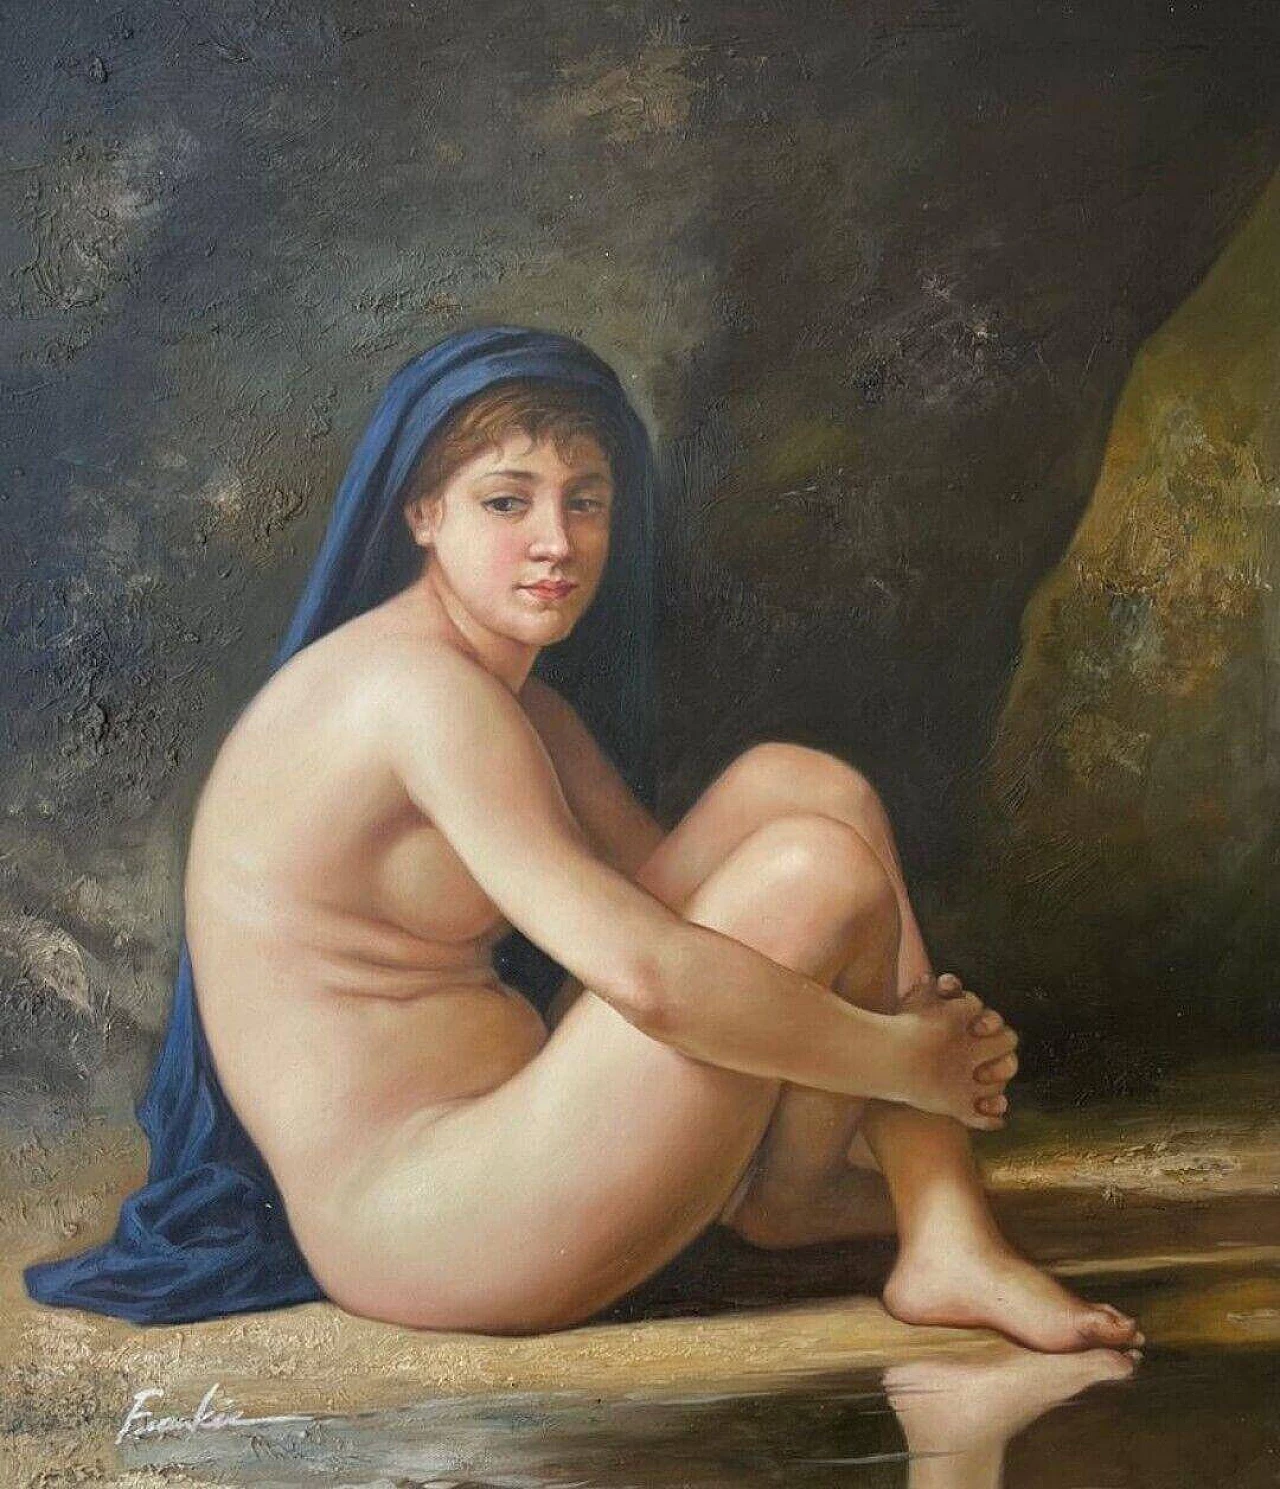 Nudo femminile seduto, dipinto a olio su tela, anni '80 3